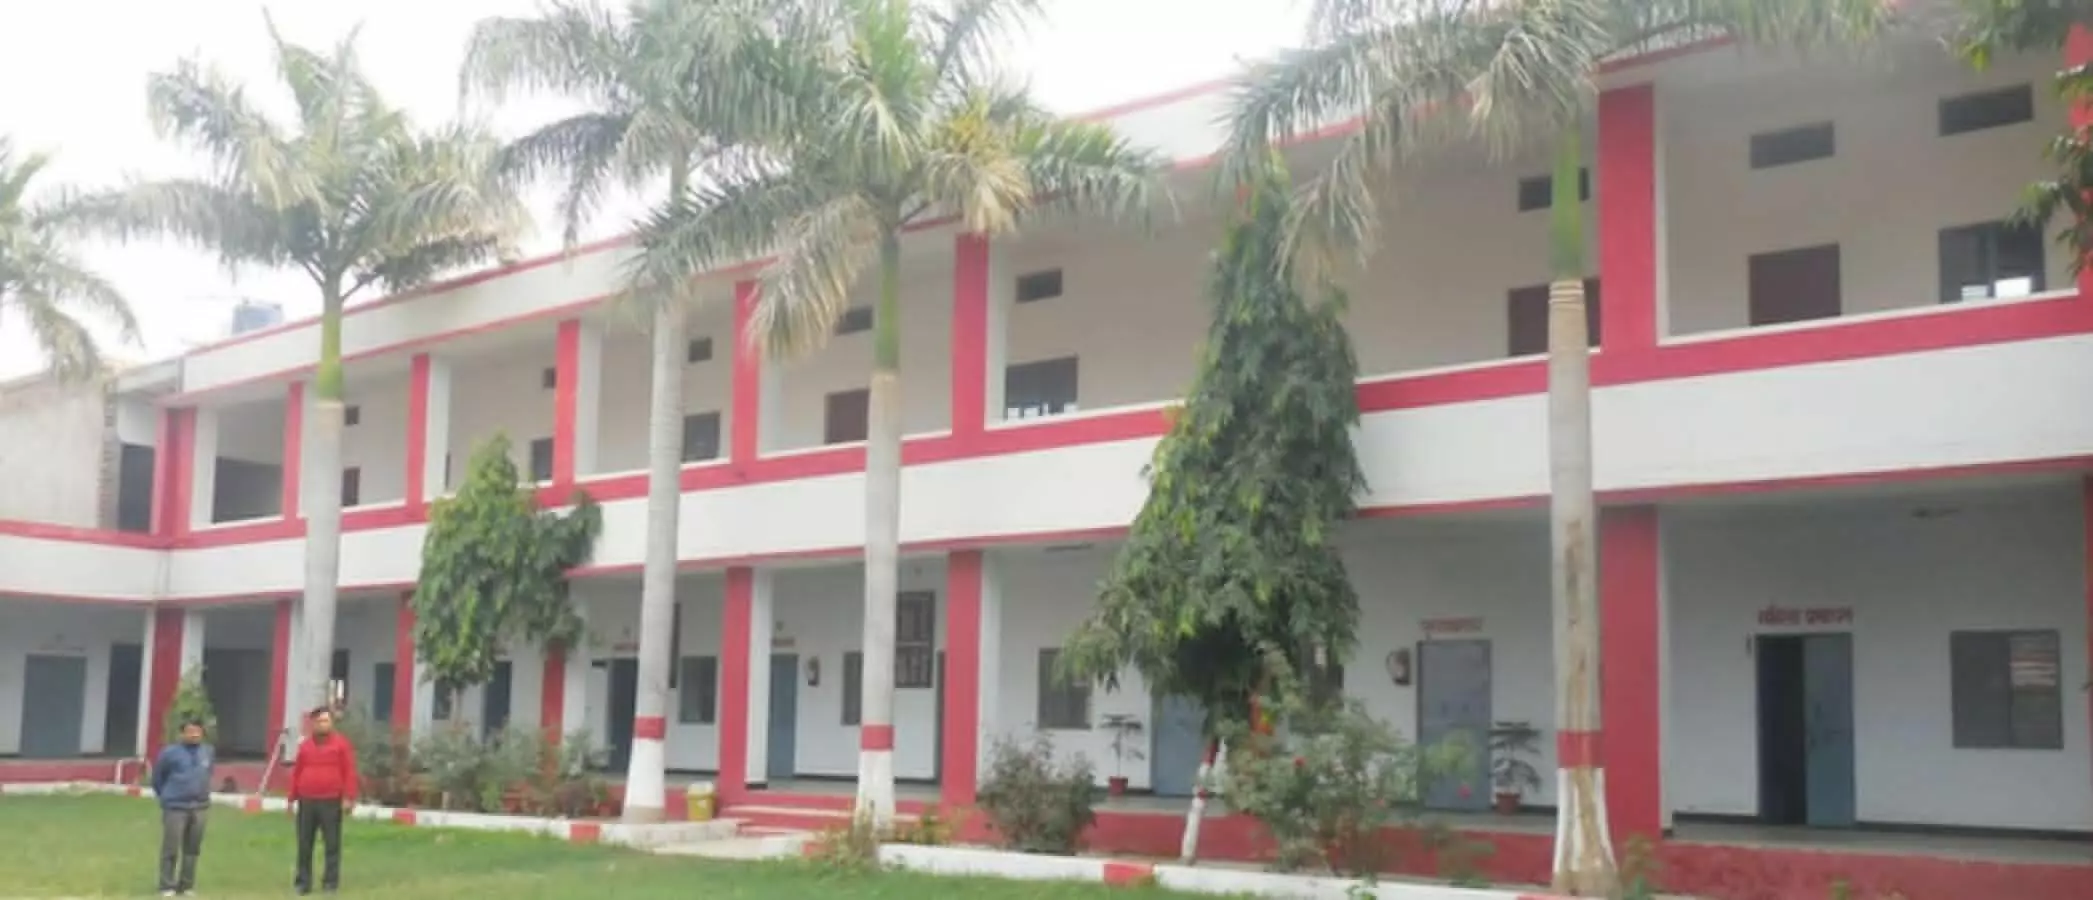 Kanpur Dehat News upper primary school Baraula principal secretary inspected shortcomings warned